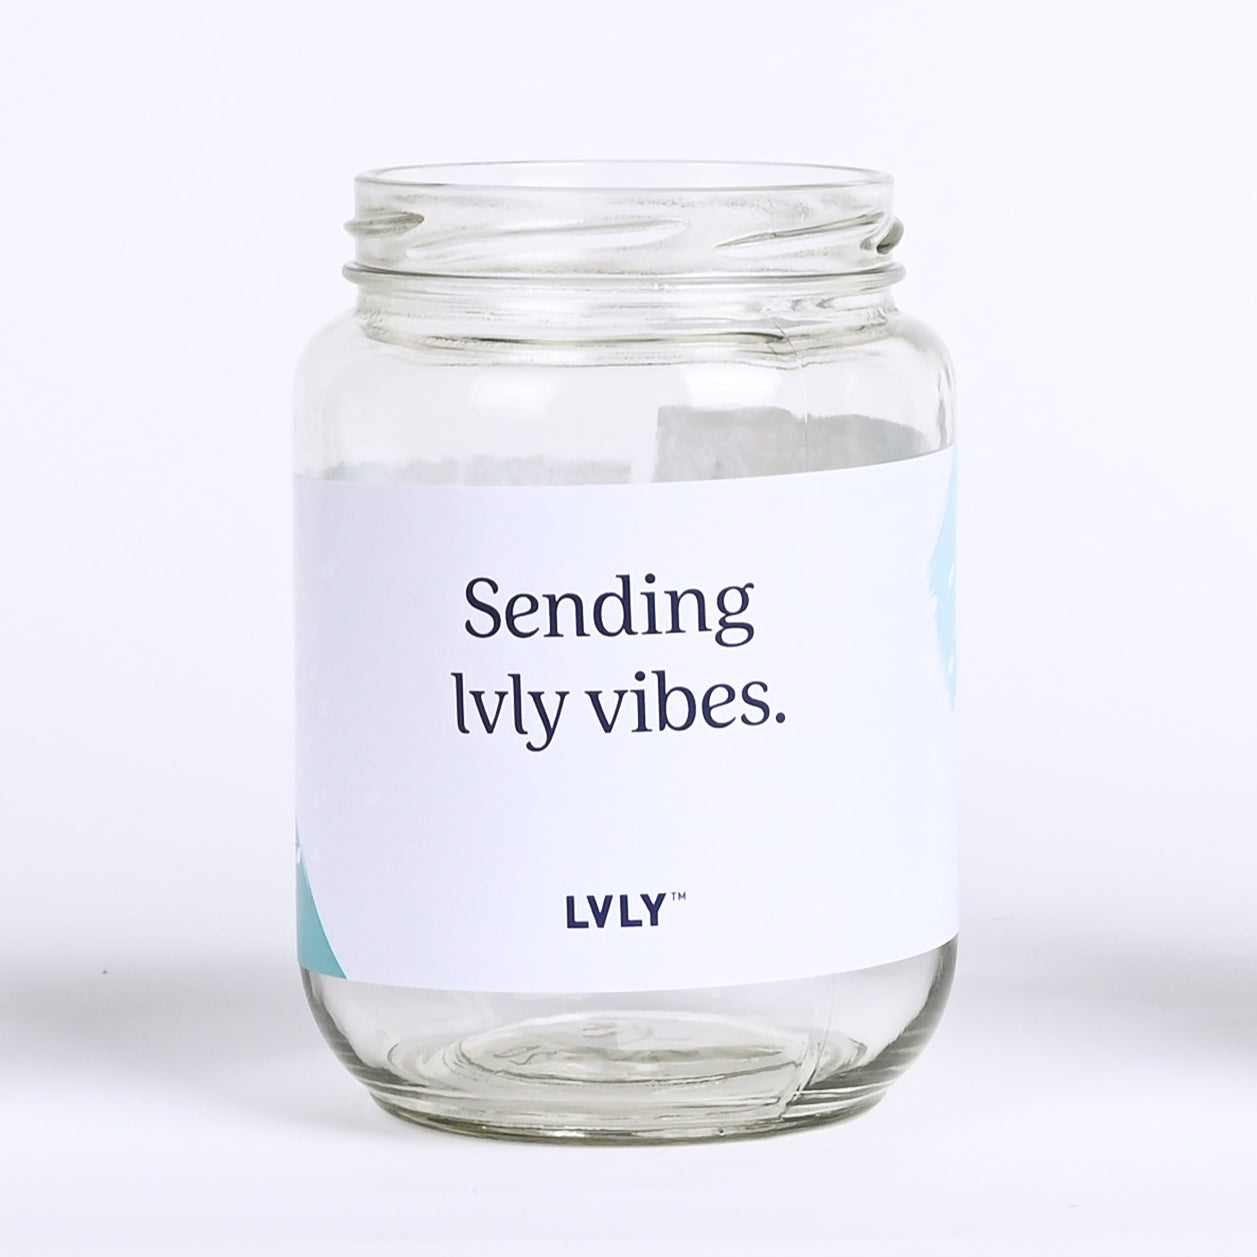 Sending LVLY vibes